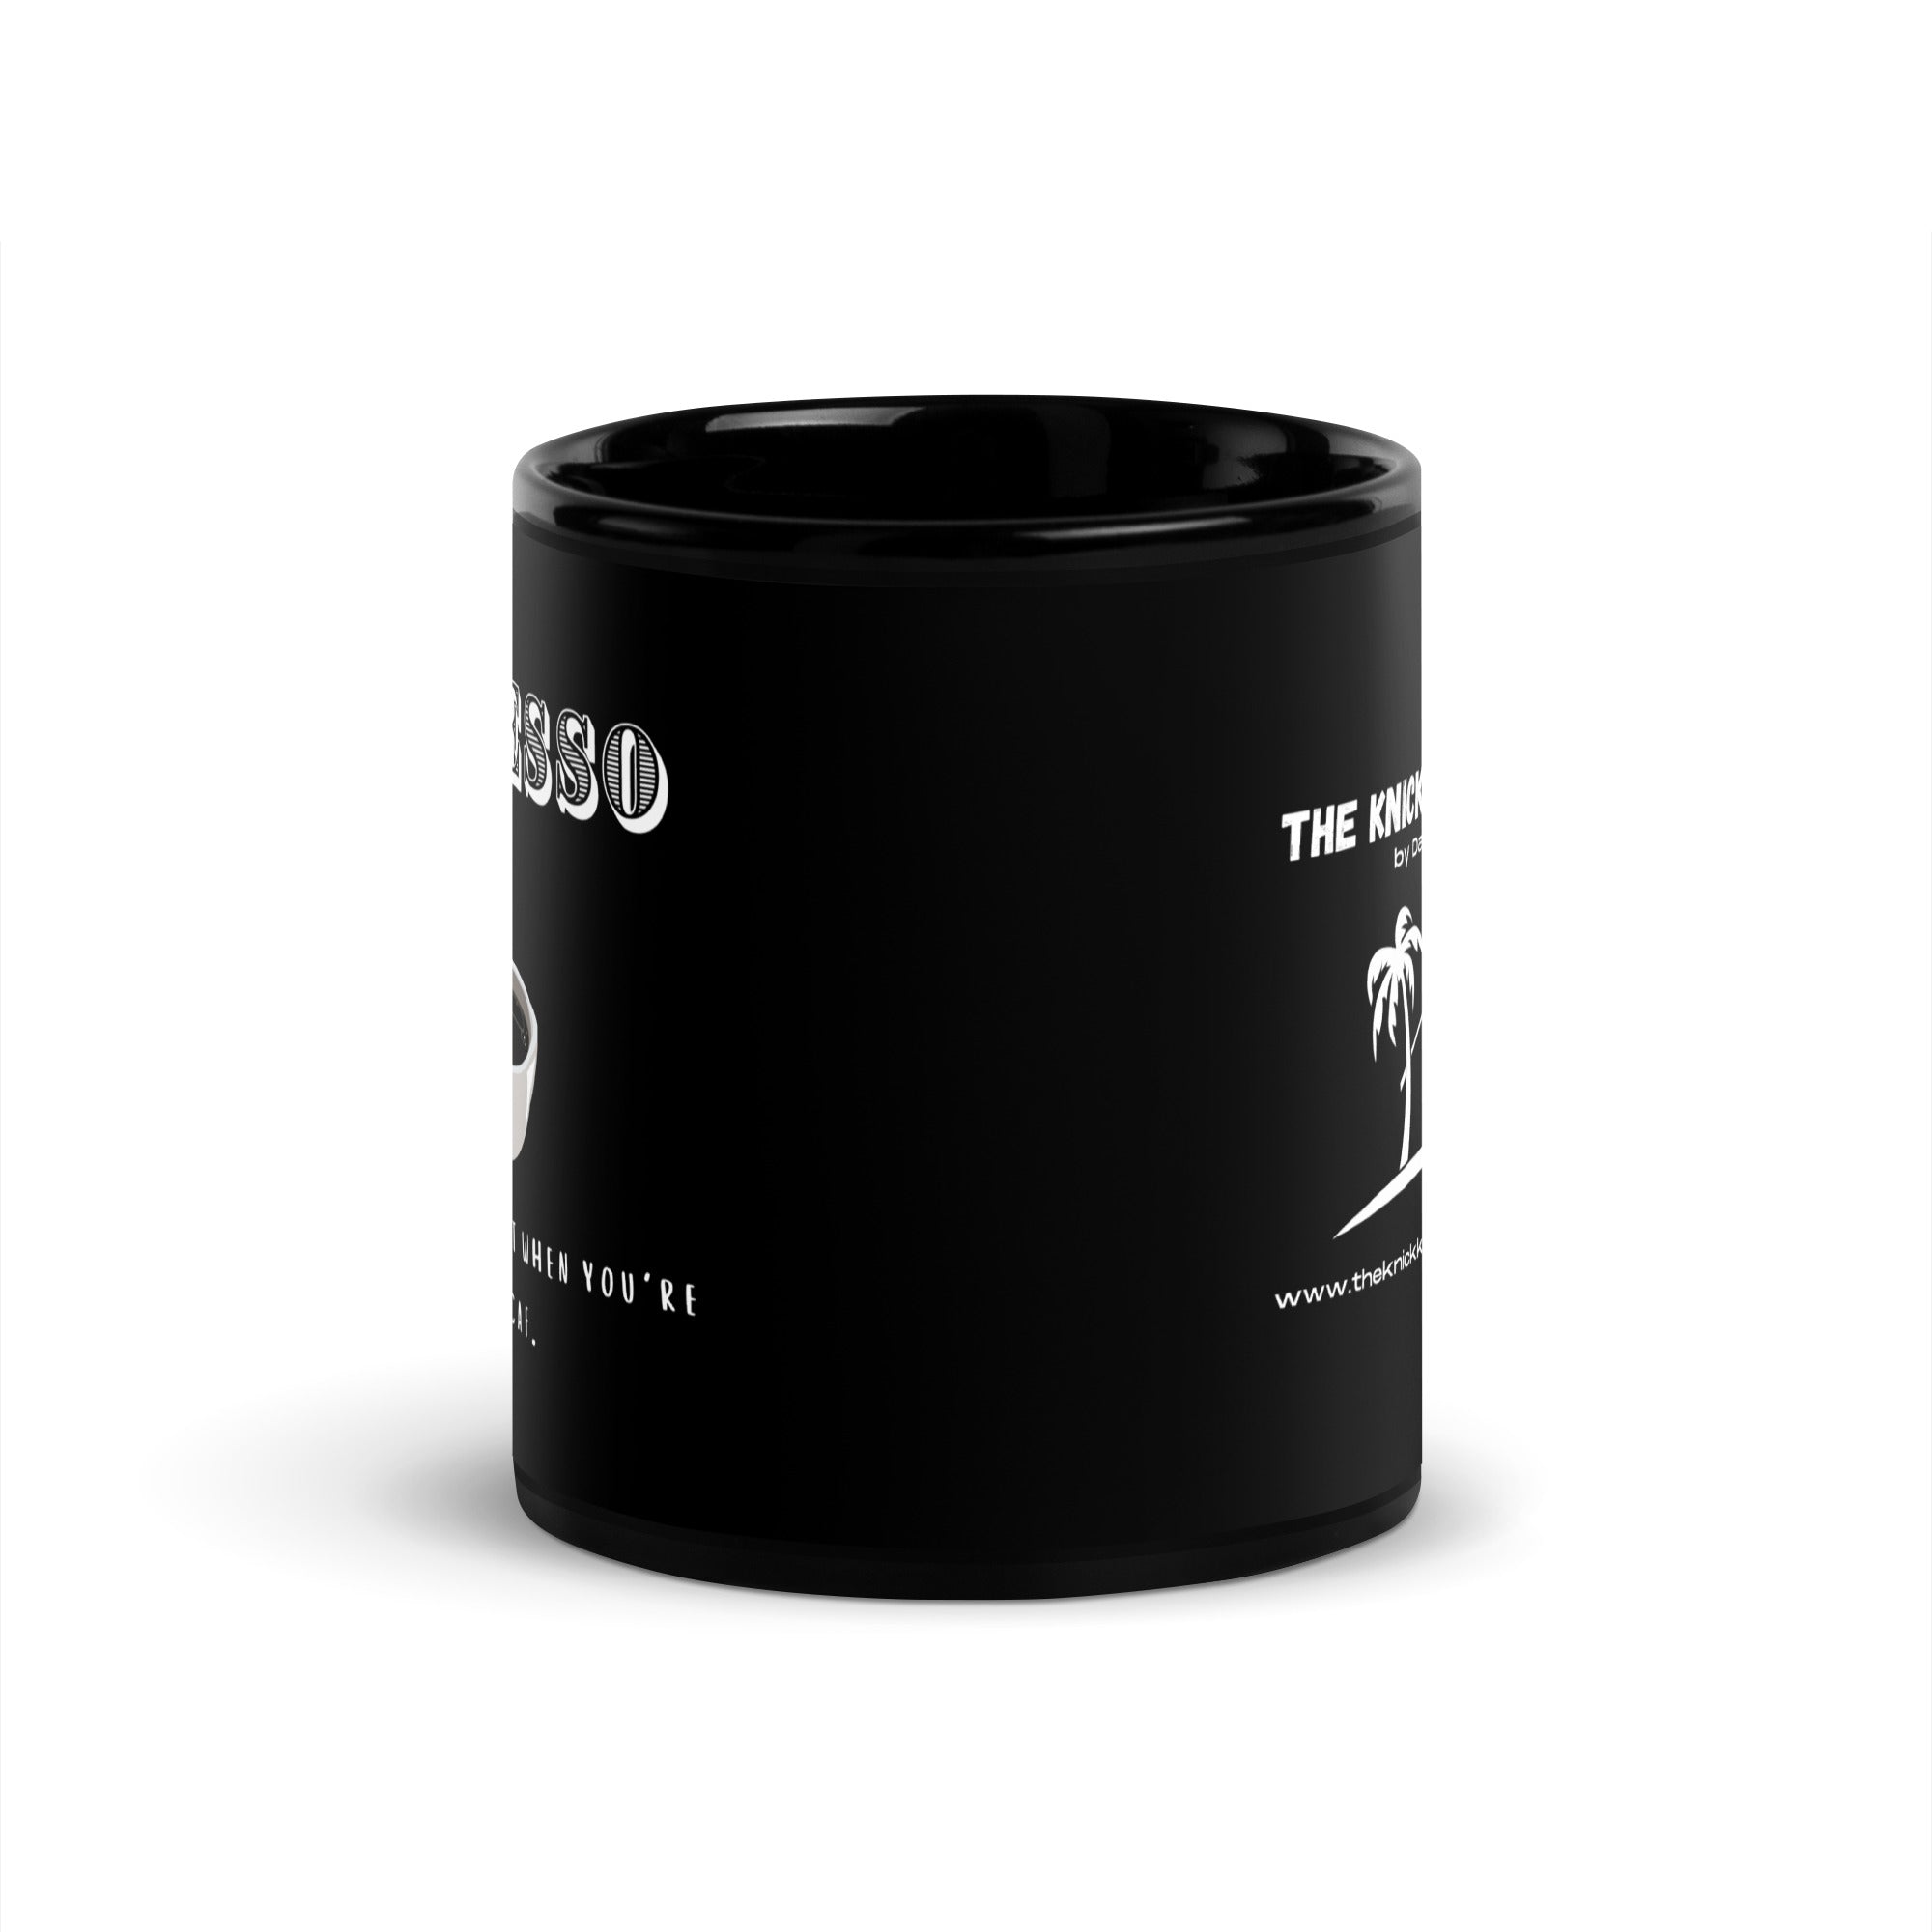 Black Glossy Mug - Depresso (R-Handed)